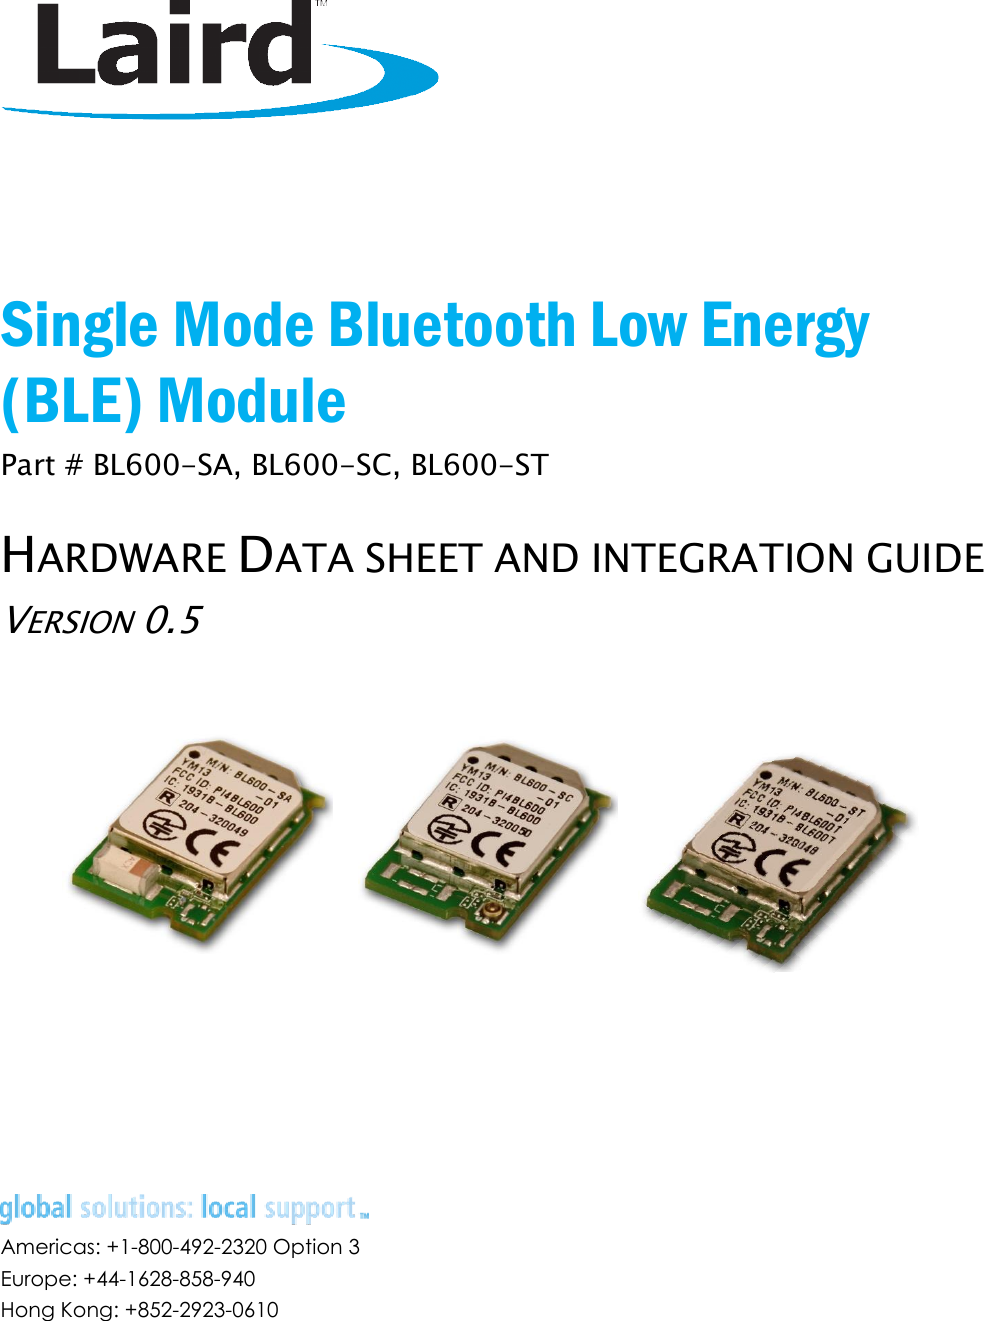       Single Mode Bluetooth Low Energy (BLE) Module Part # BL600-SA, BL600-SC, BL600-ST HARDWARE DATA SHEET AND INTEGRATION GUIDE VERSION 0.5         Americas: +1-800-492-2320 Option 3 Europe: +44-1628-858-940 Hong Kong: +852-2923-0610 